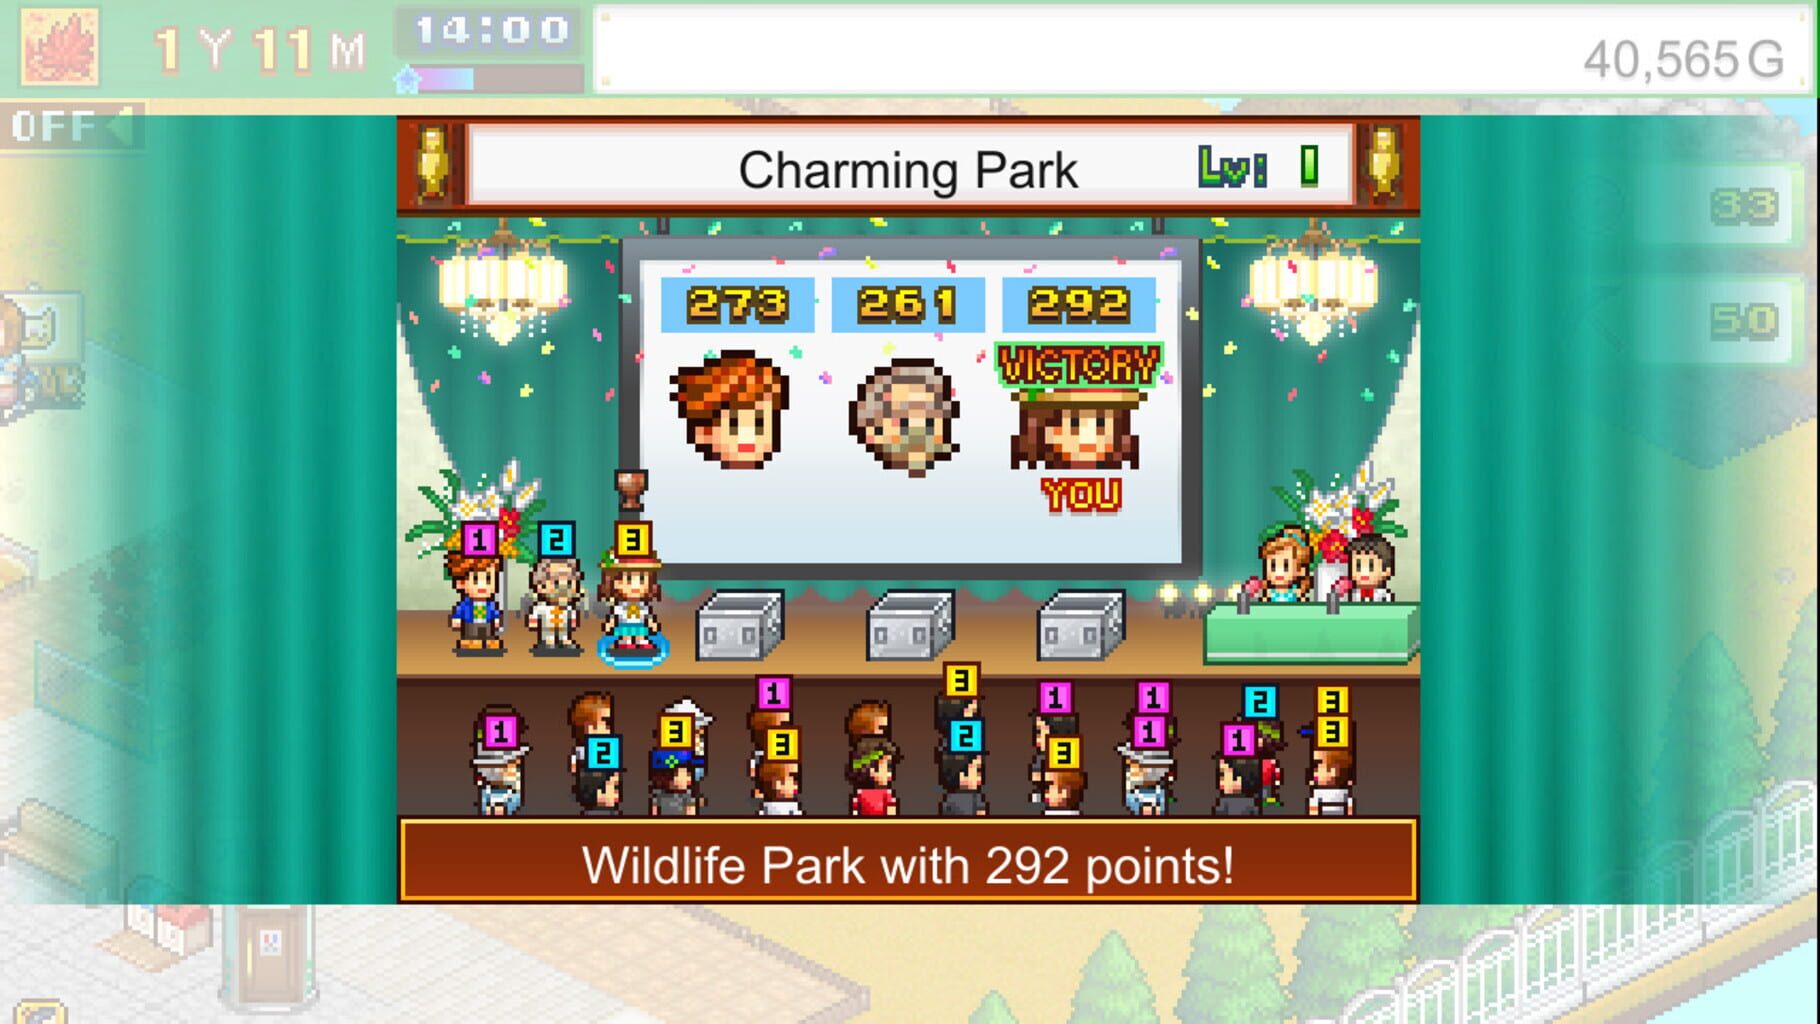 Captura de pantalla - Wild Park Manager